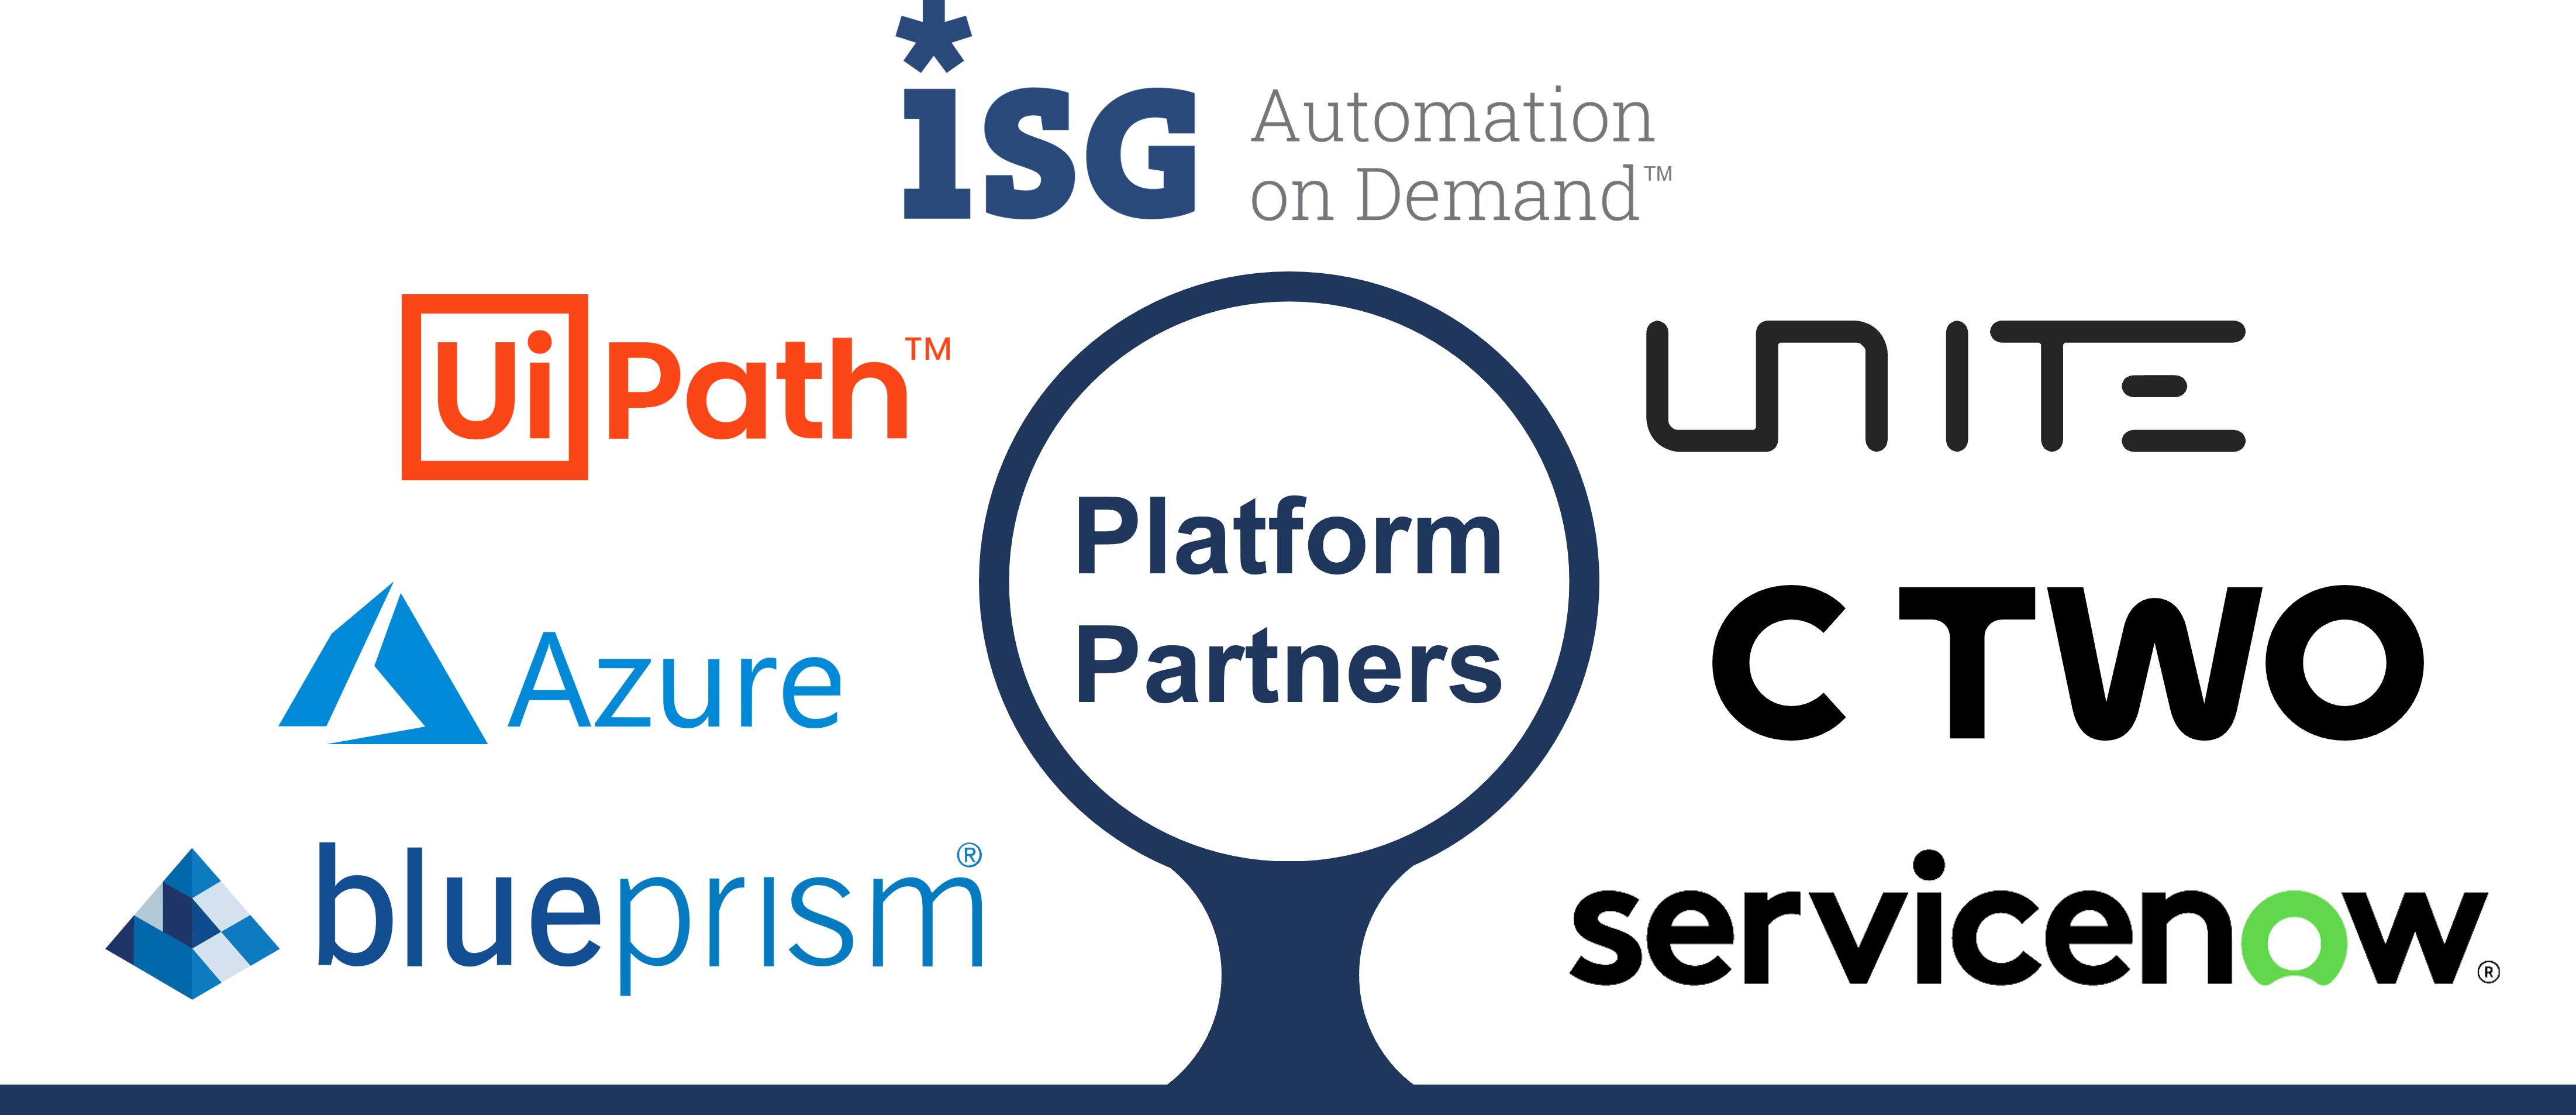 automation on demand platform partners